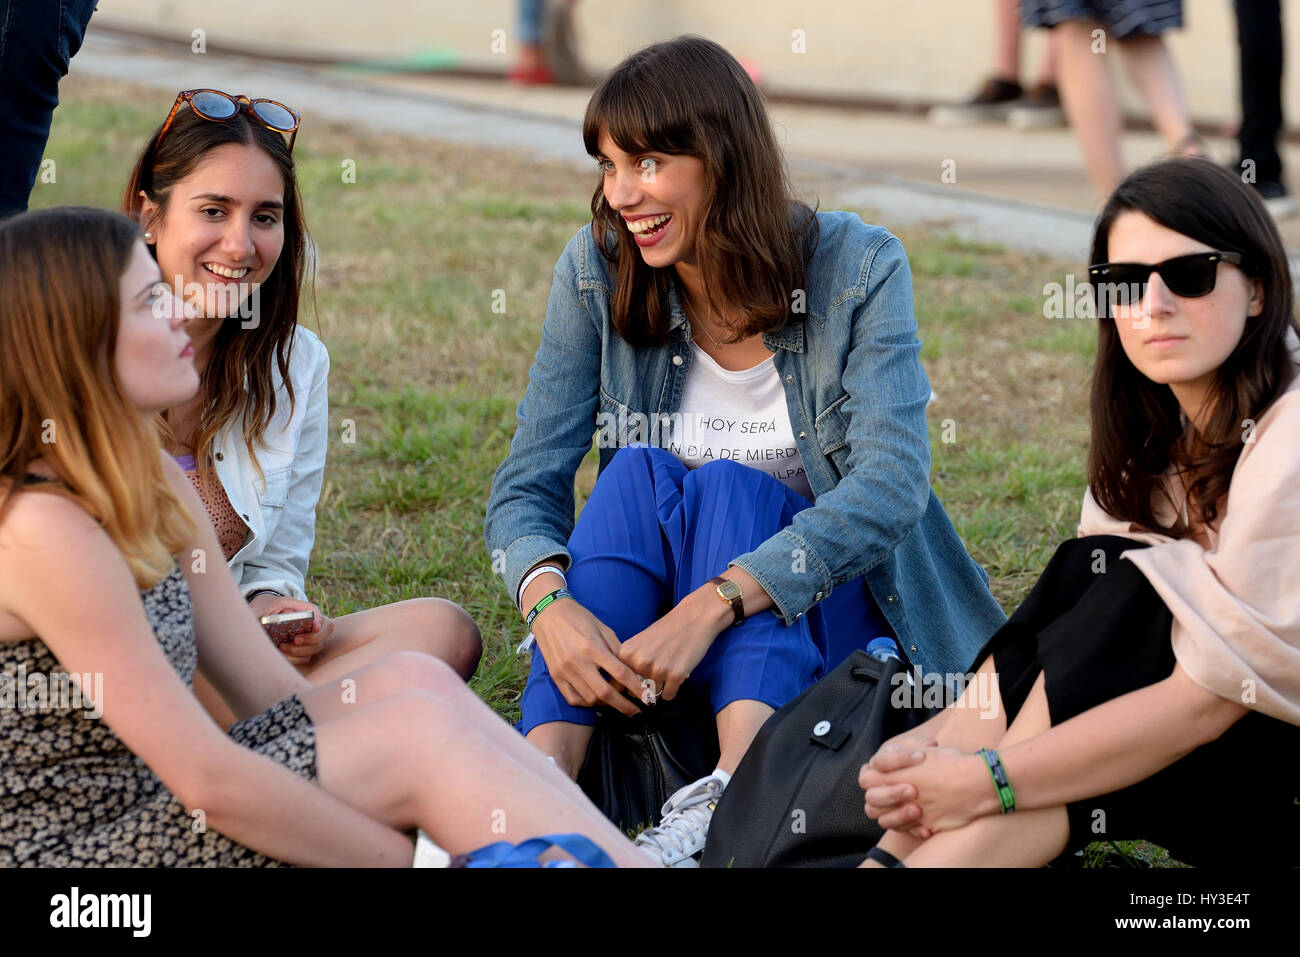 BARCELONA - JUN 1: Women sit on the grass at Primavera Sound 2016 Festival on June 1, 2016 in Barcelona, Spain. Stock Photo